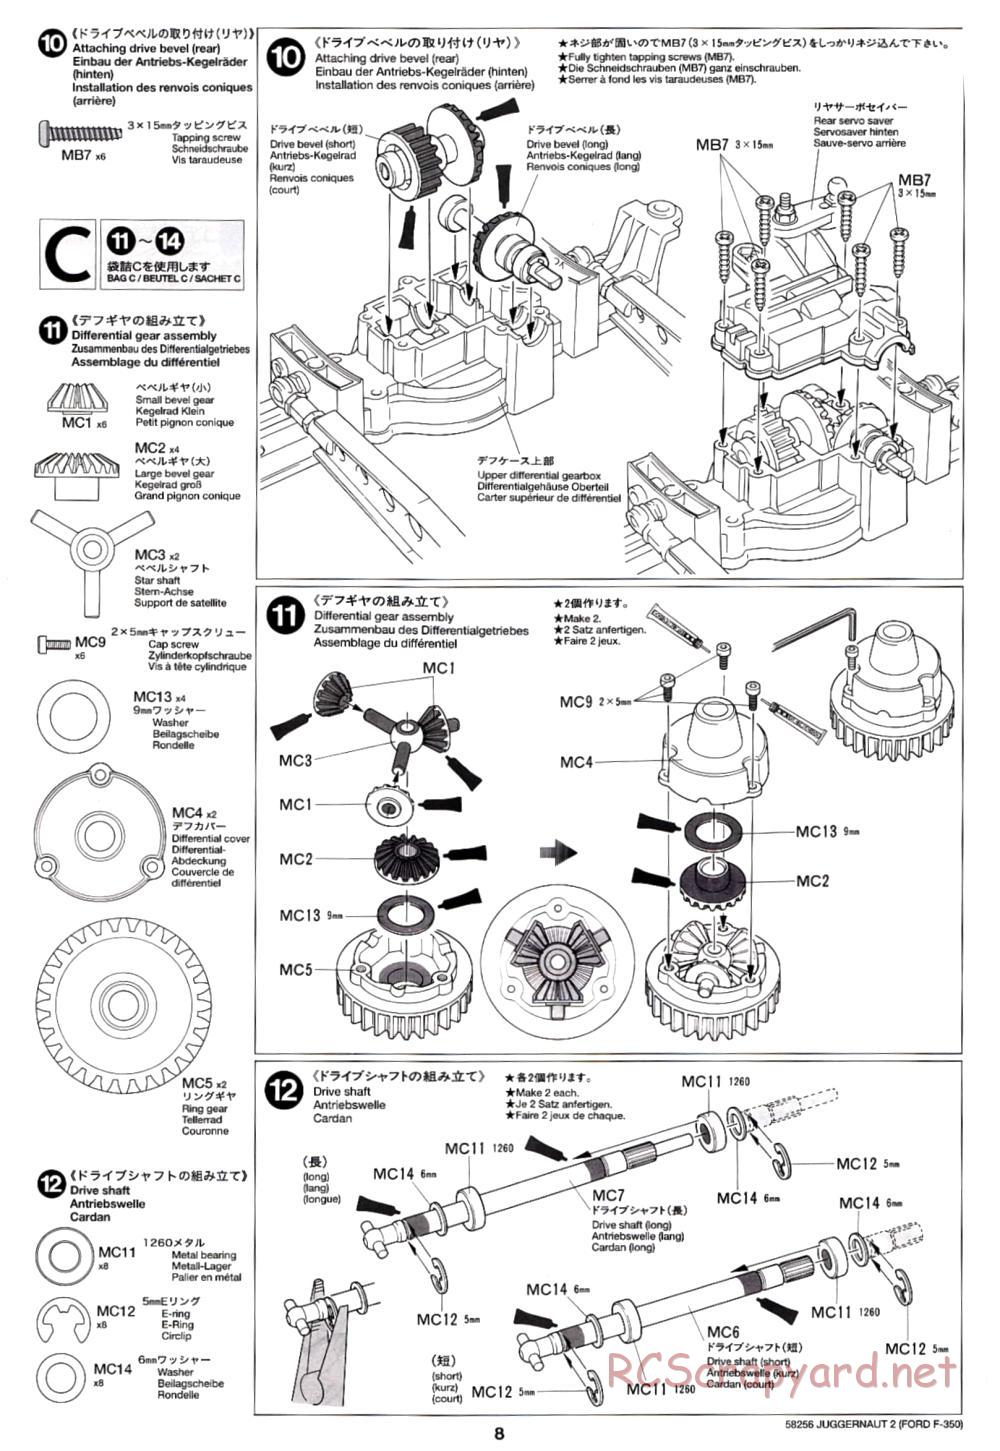 Tamiya - Juggernaut 2 Chassis - Manual - Page 8